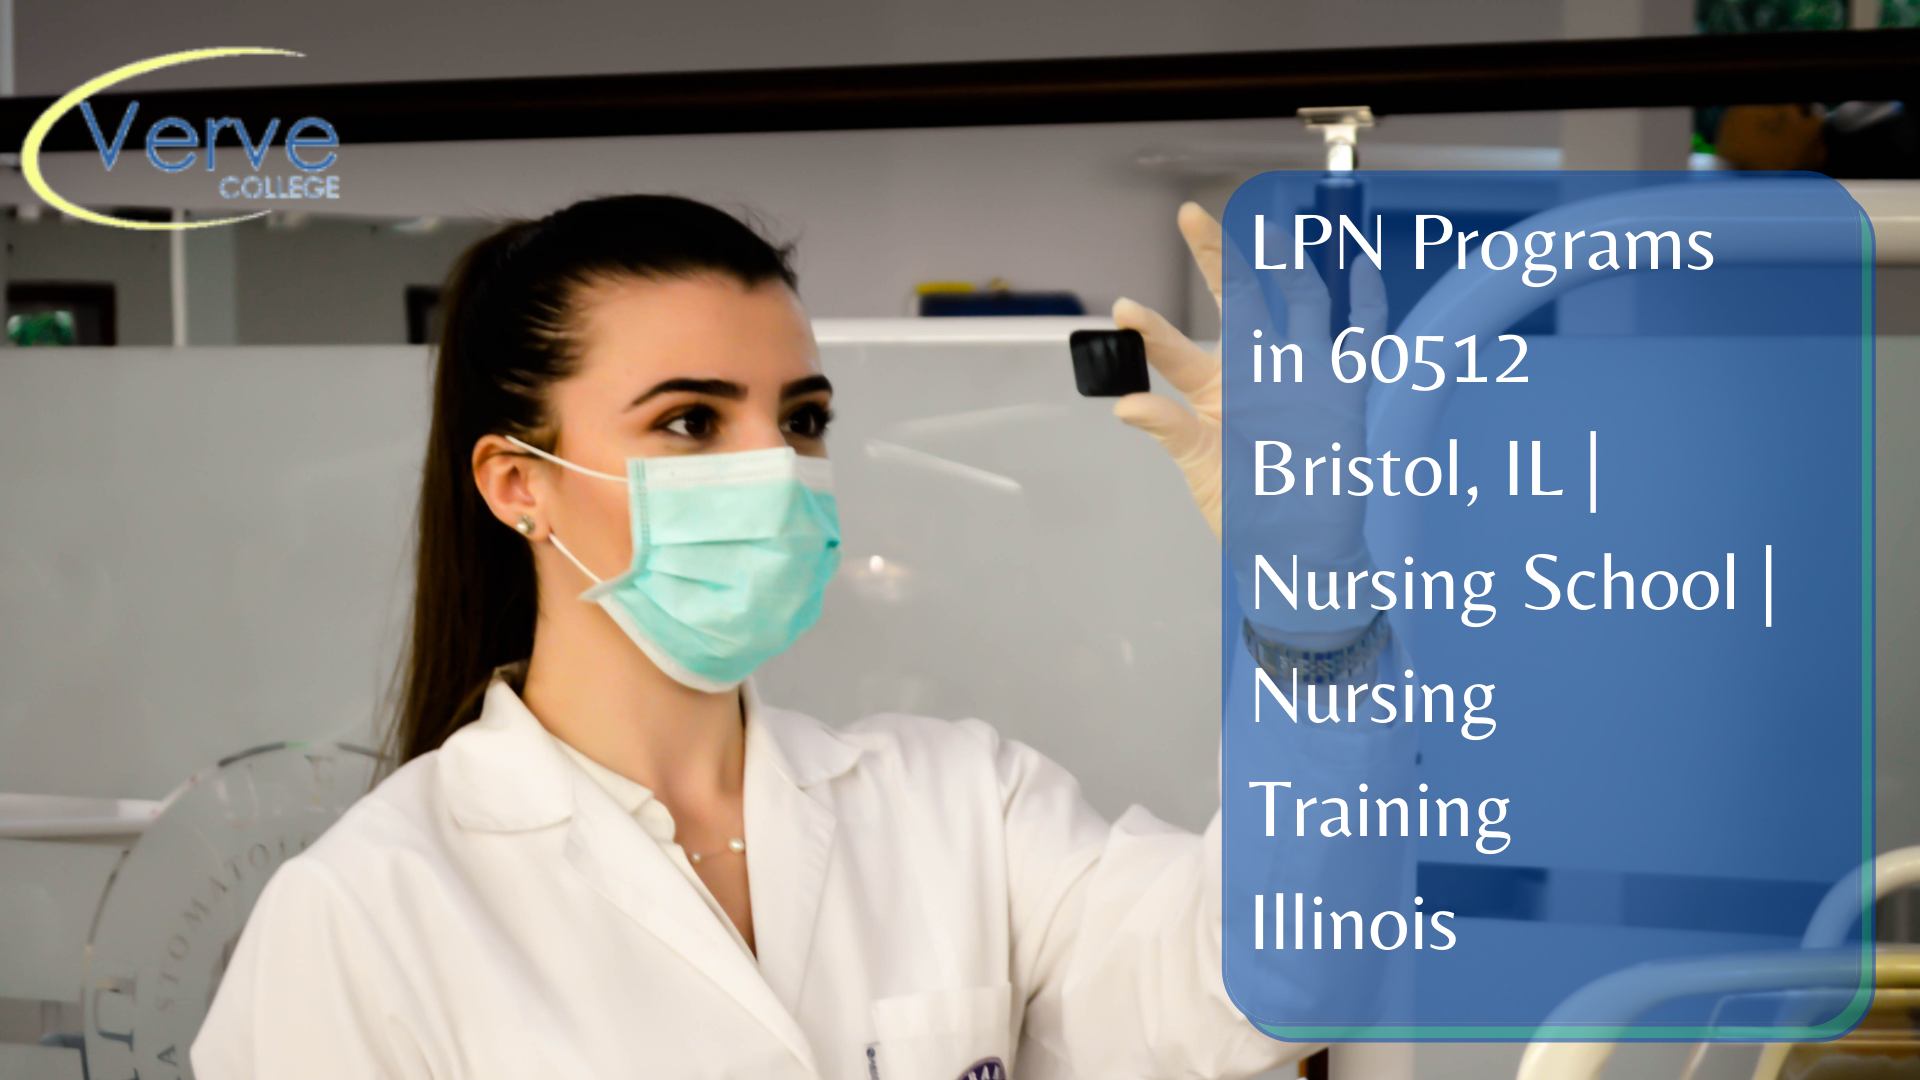 LPN Programs in 60512 Bristol, IL | Nursing School | Nursing Training Illinois